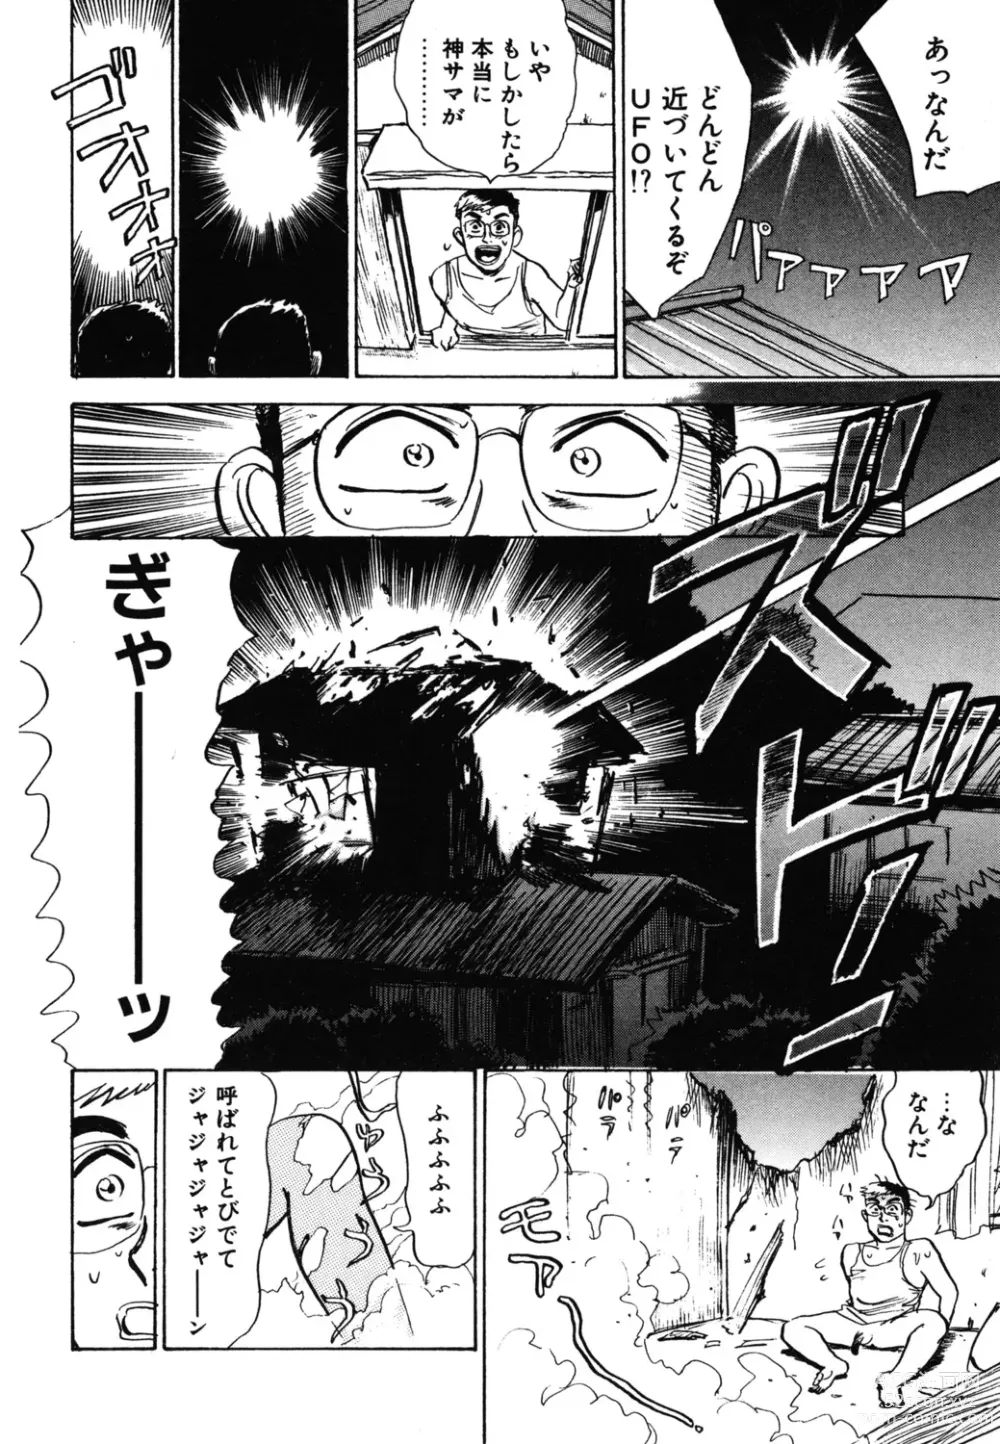 Page 168 of manga Abunai Reiko Sensei 1